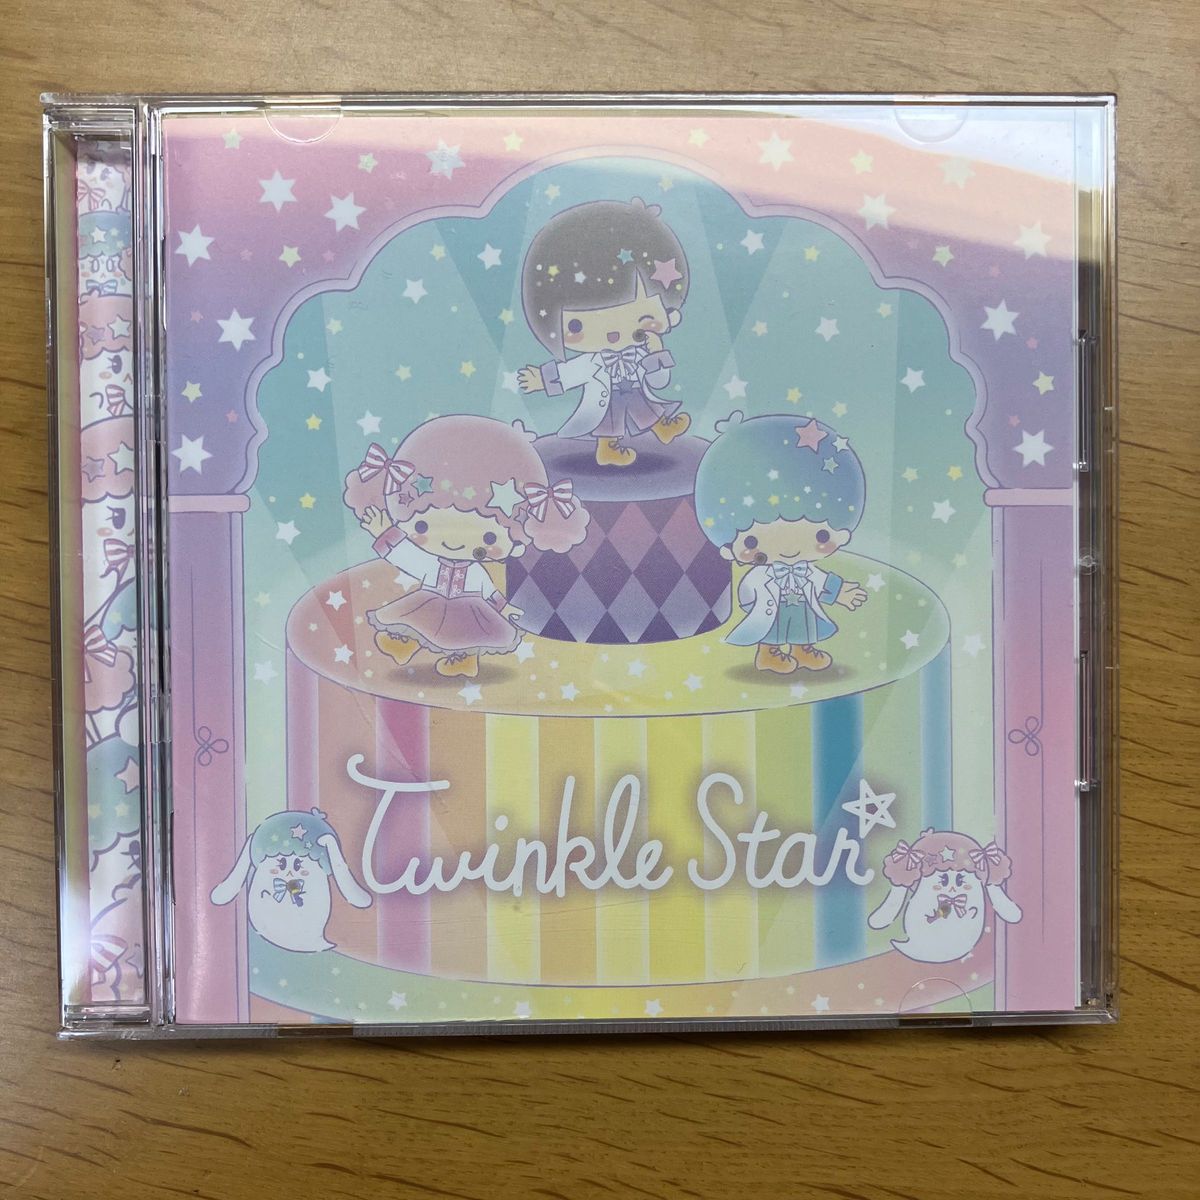 Twinkle Star 初回限定盤 [蒼井翔太]